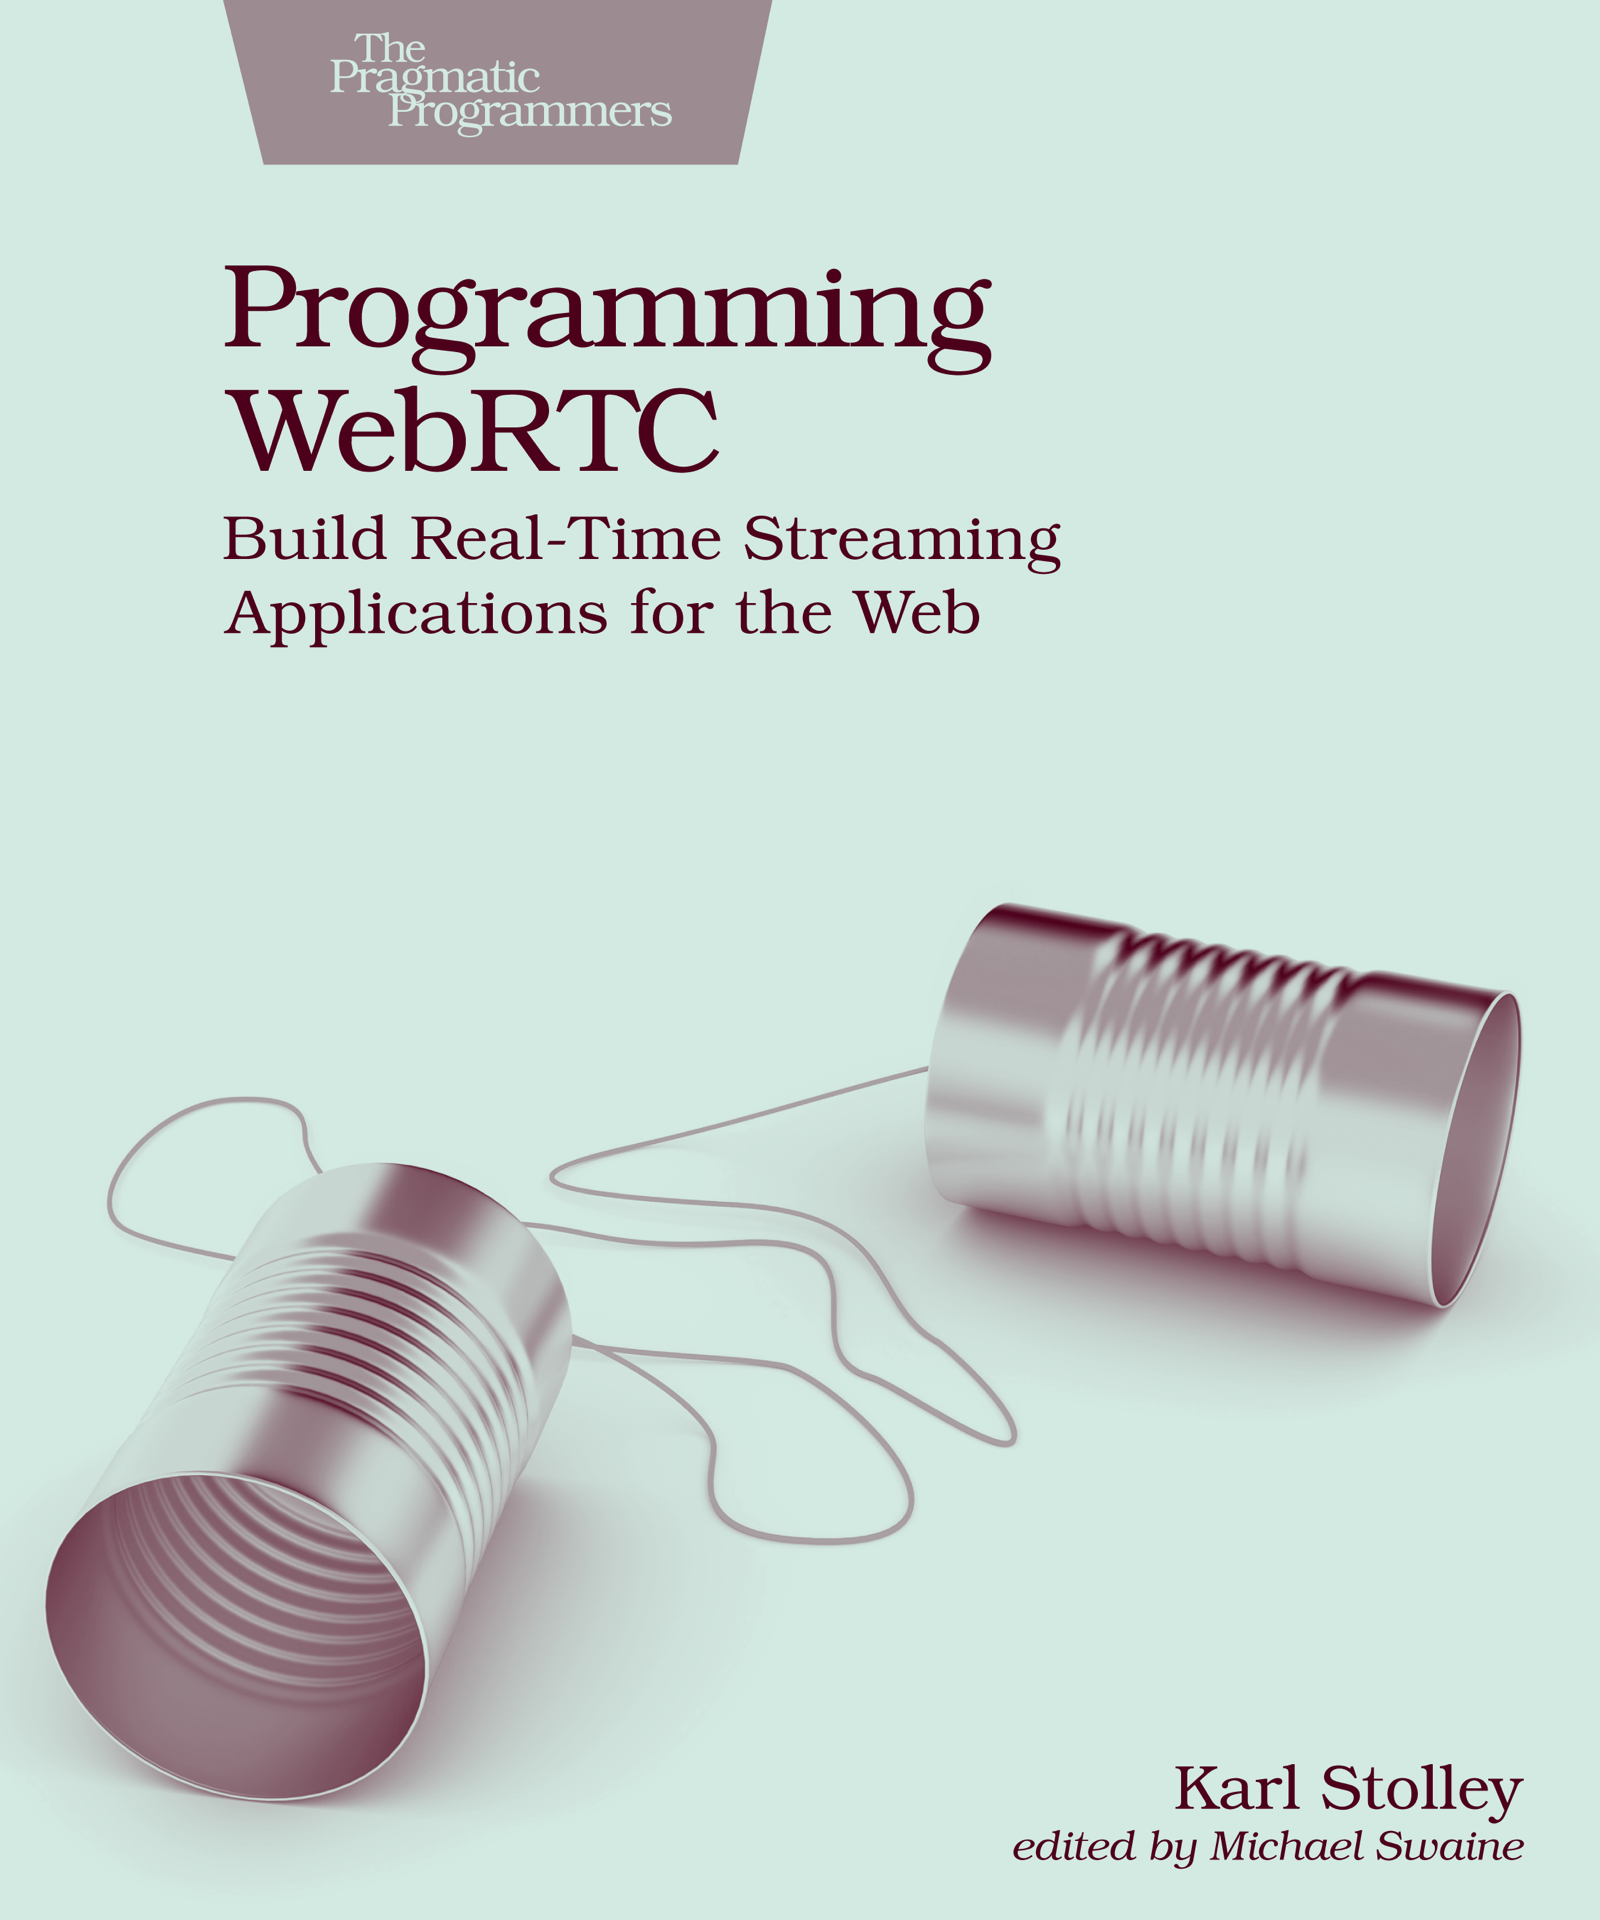 Programming WebRTC cover.